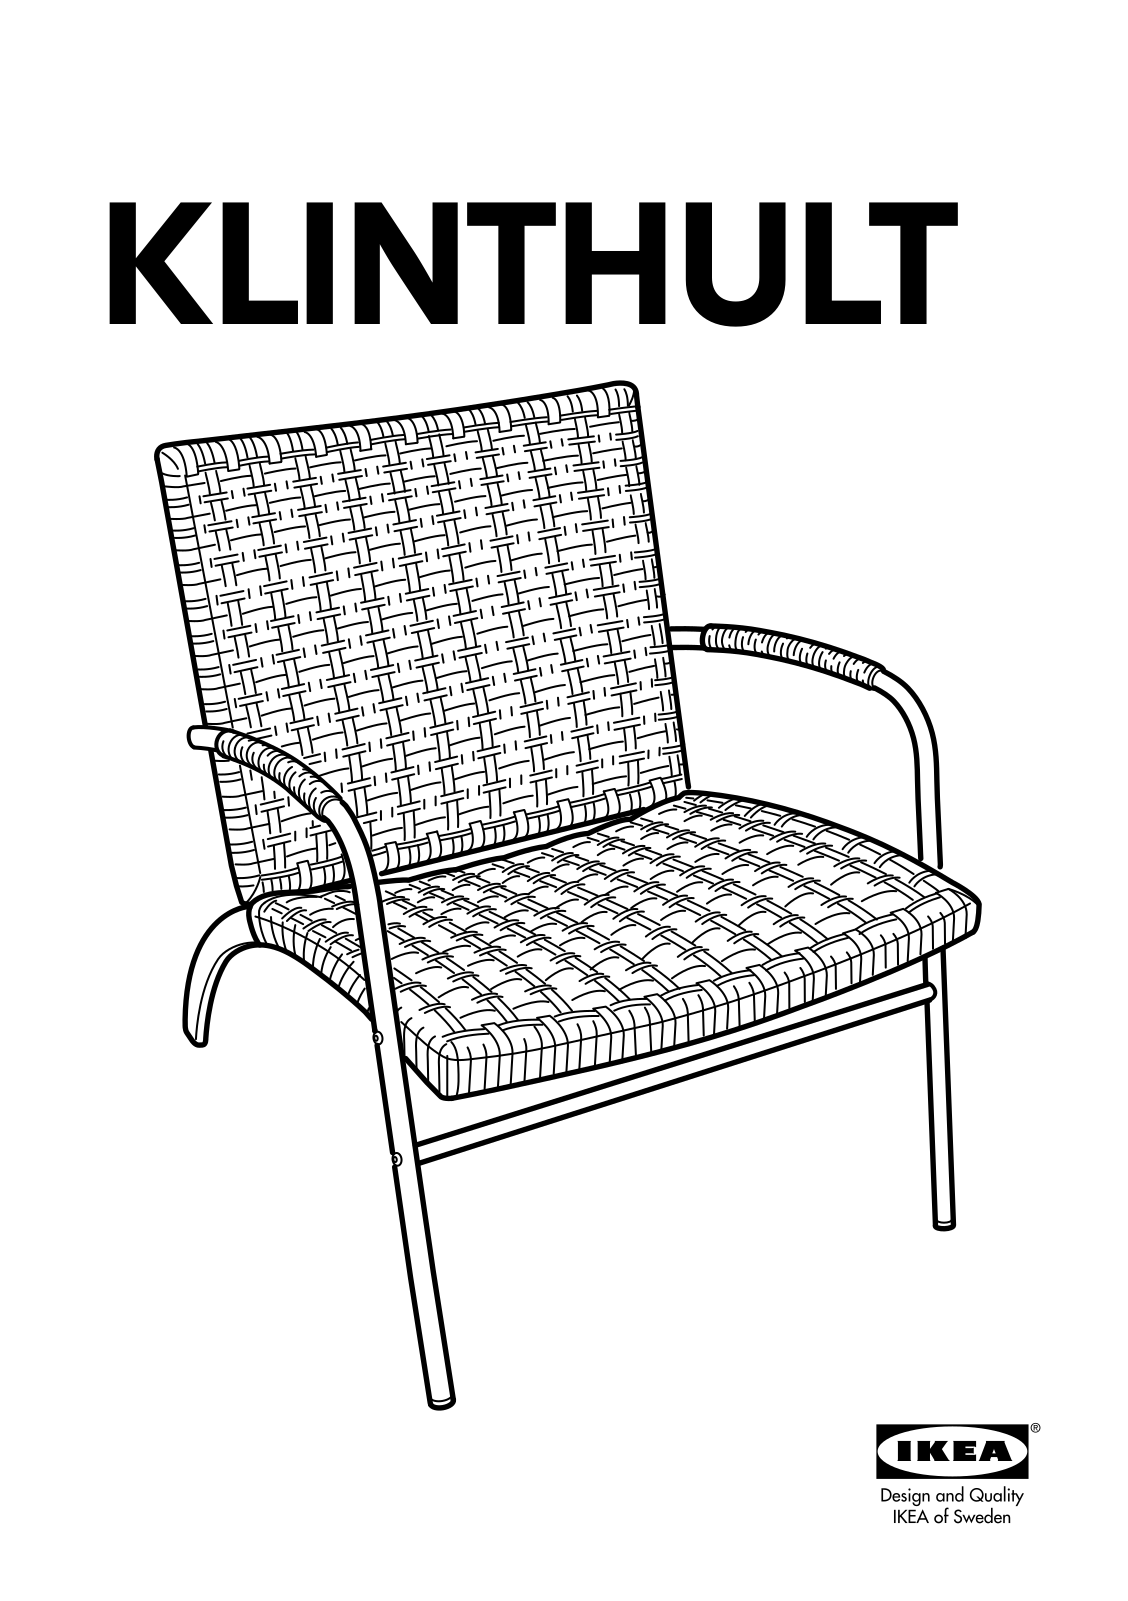 IKEA KLINTHULT User Manual